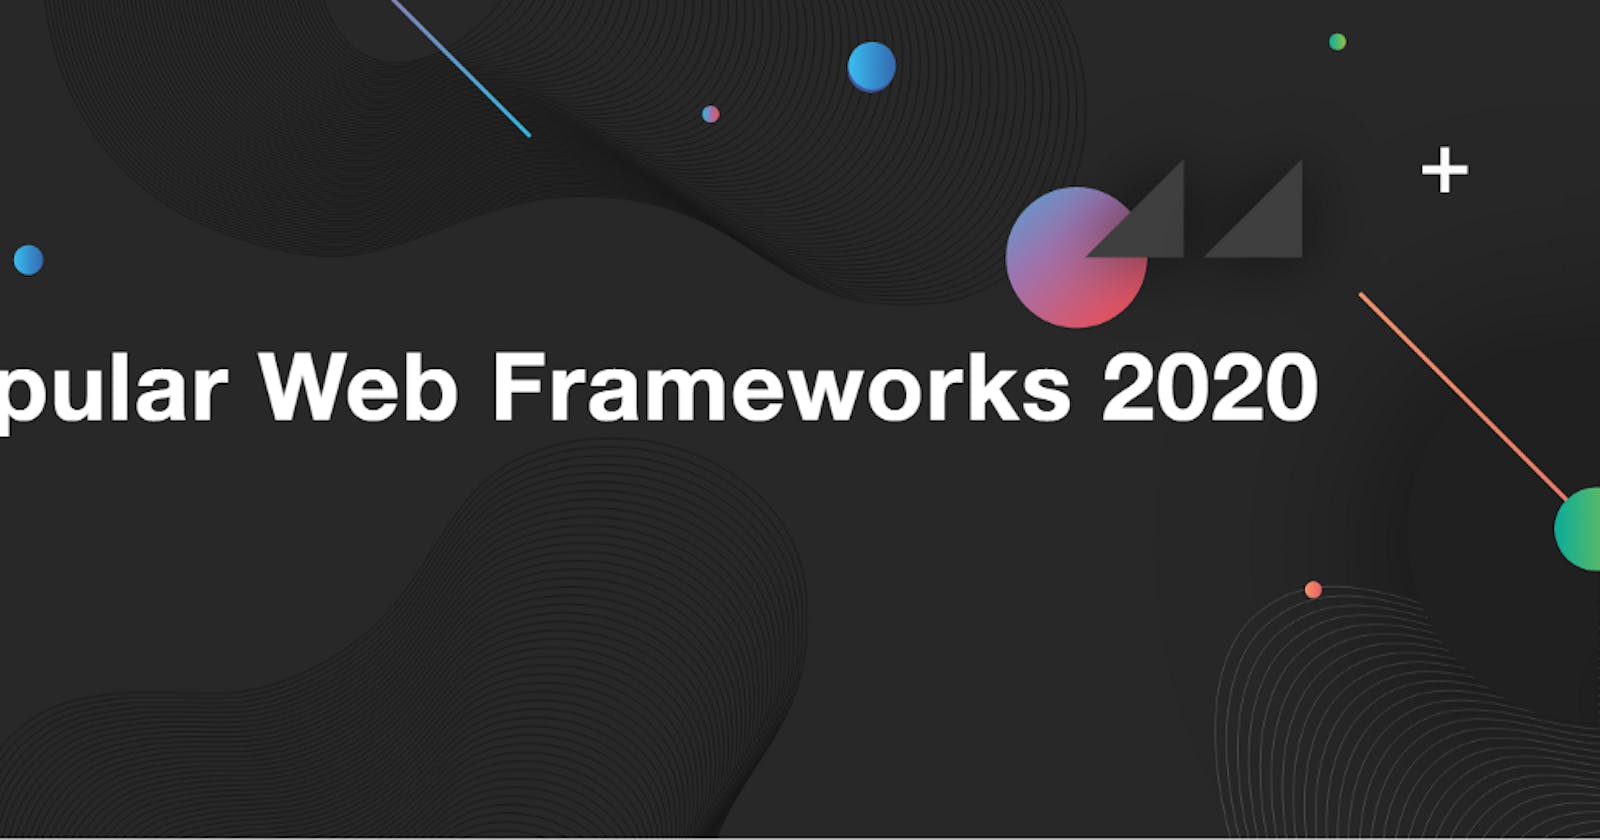 10 Most Popular Web Frameworks in 2020